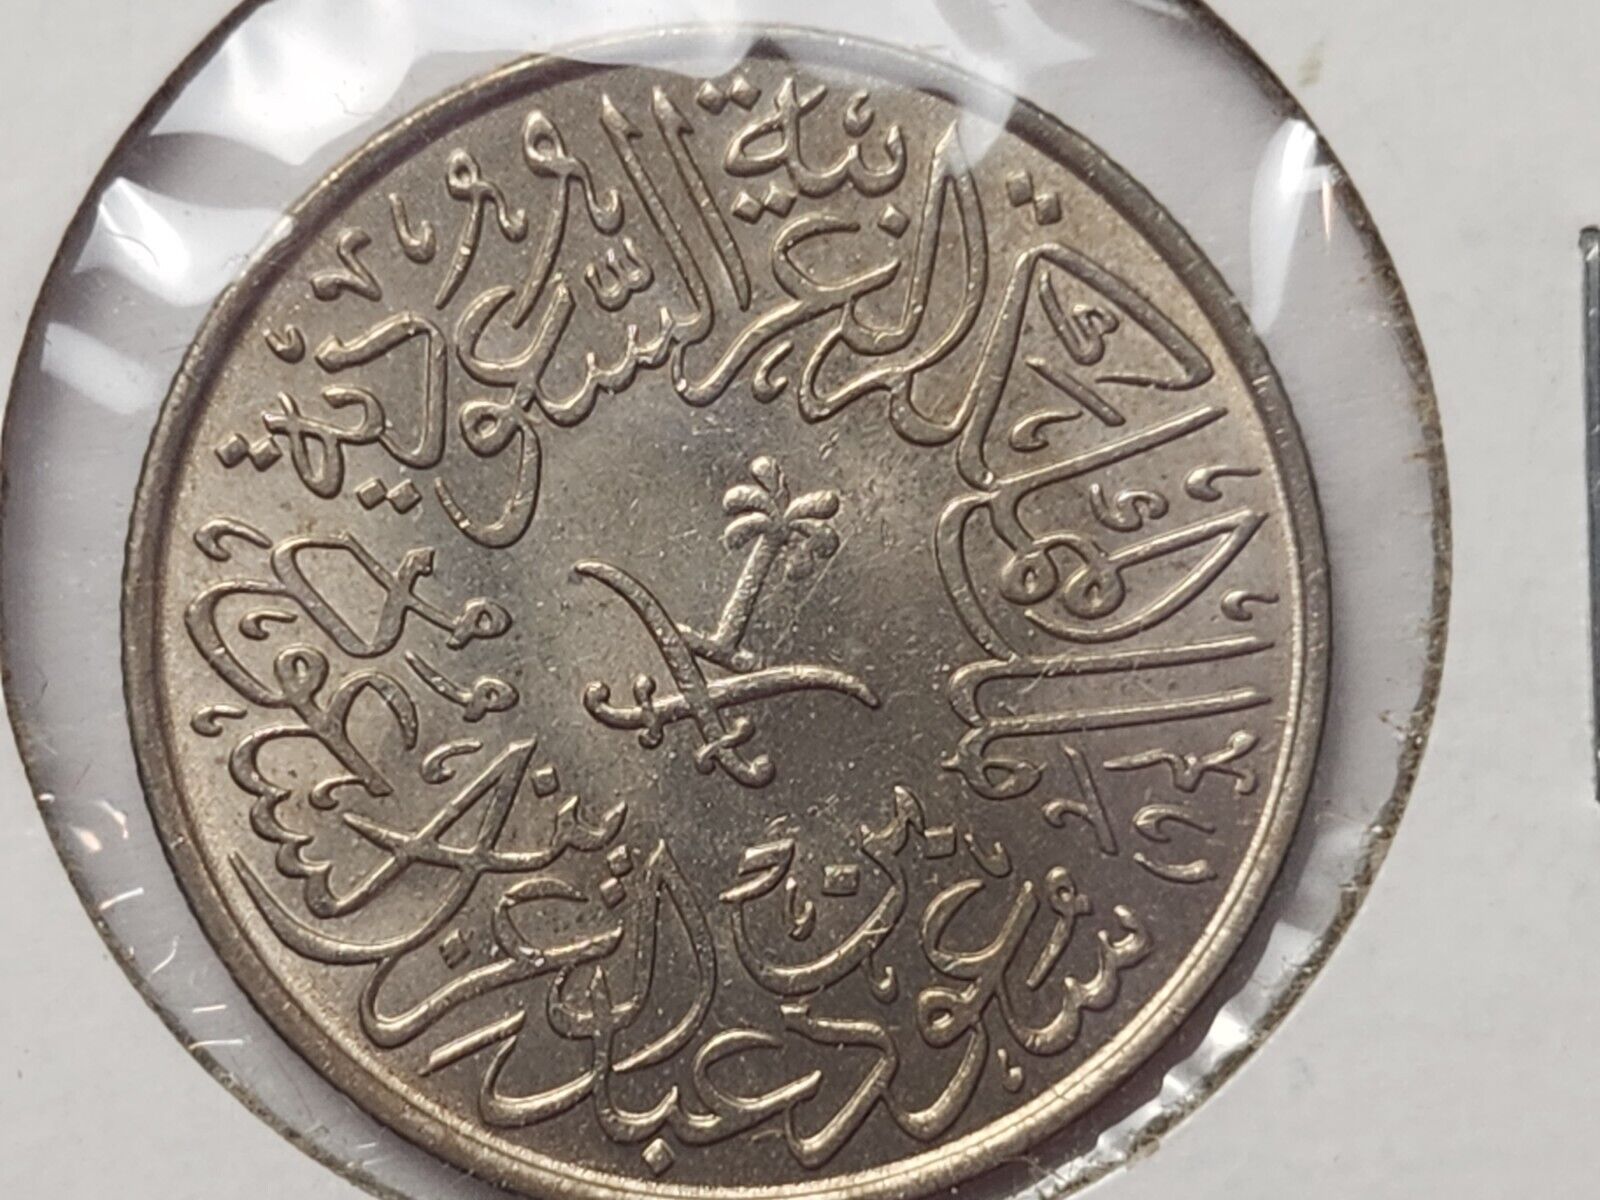 1379 / 1959 Saudi Arabia 2 Ghirsh Coin Uncirculated